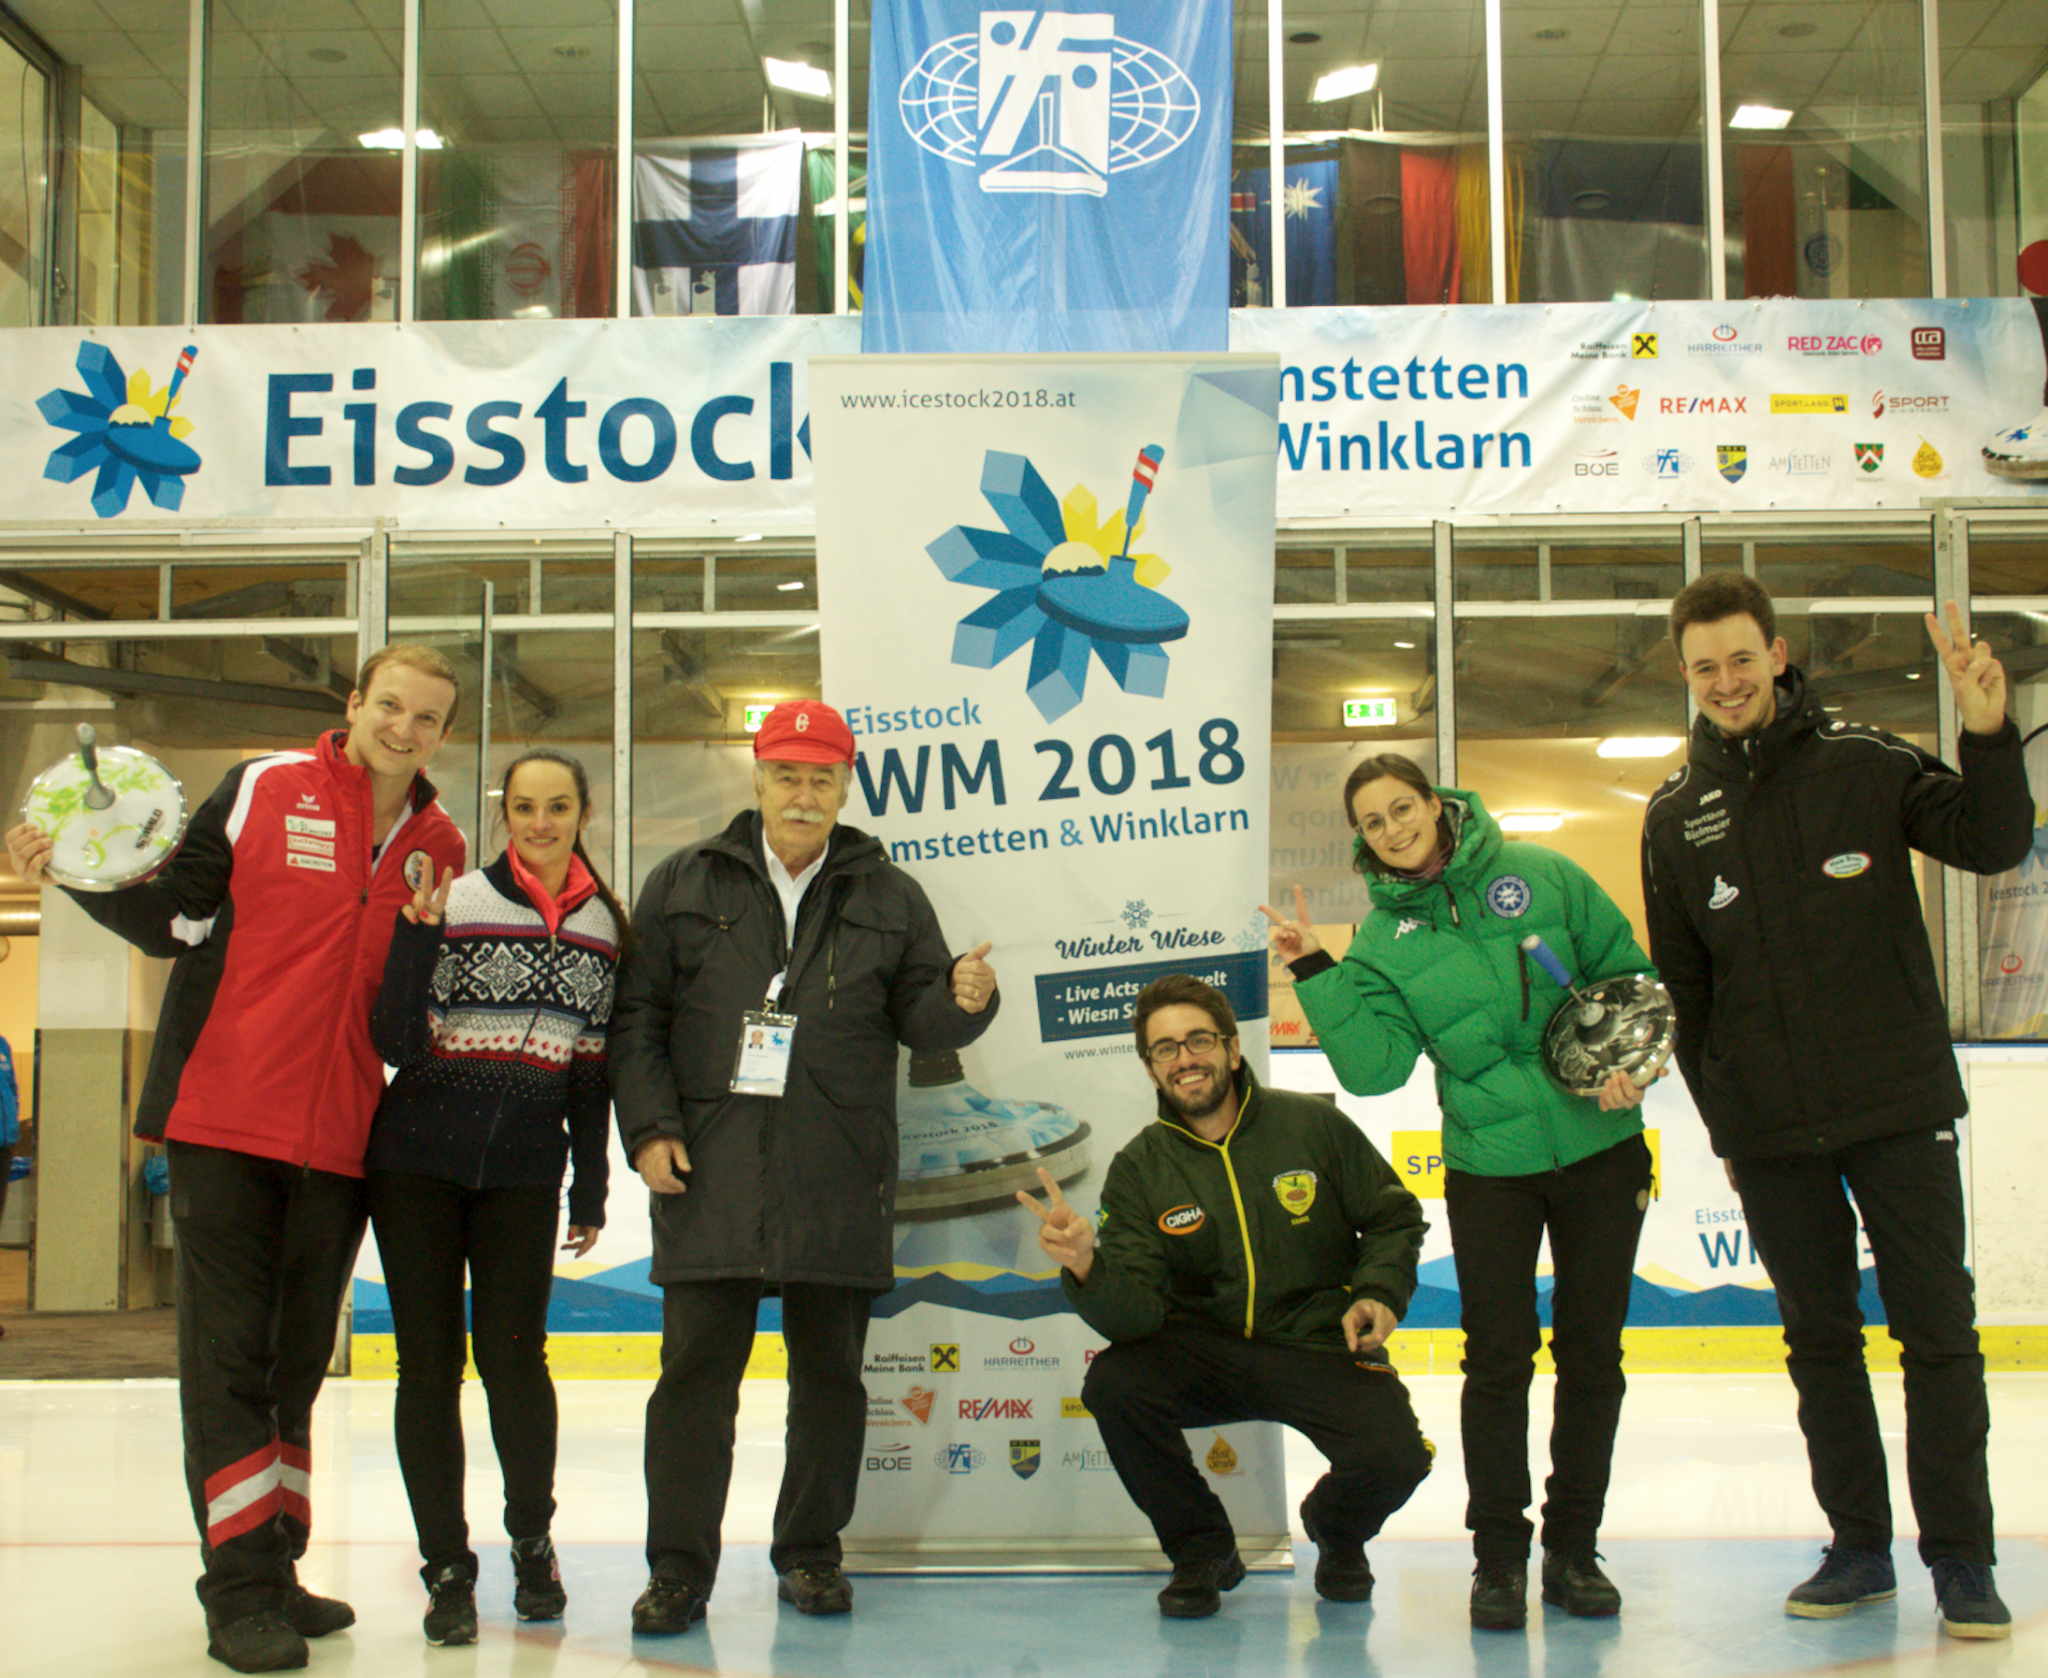 The International Federation Icestocksport held its 63rd Ordinary Congress in Winklarn in Austria ©IFI